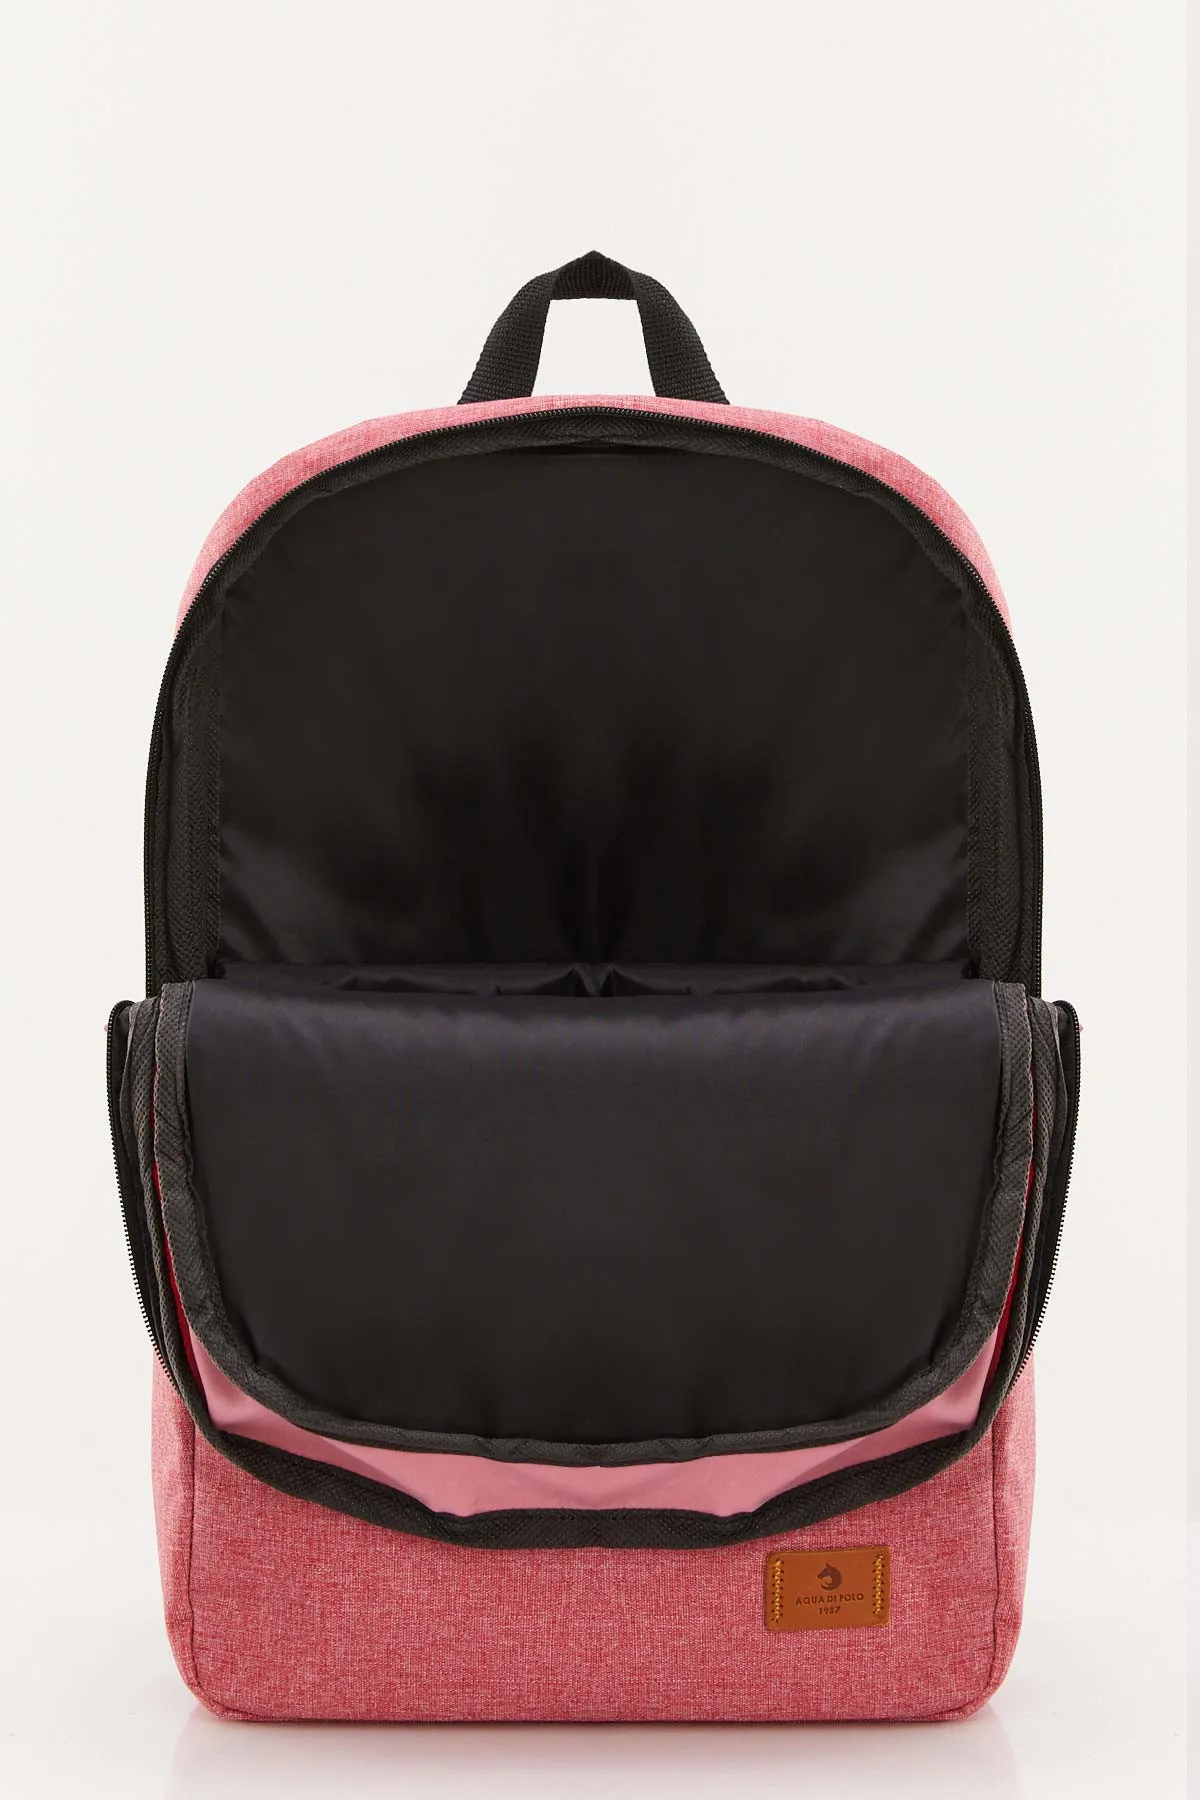 Рюкзак унисекс Di Polo apba0109 розовый#4